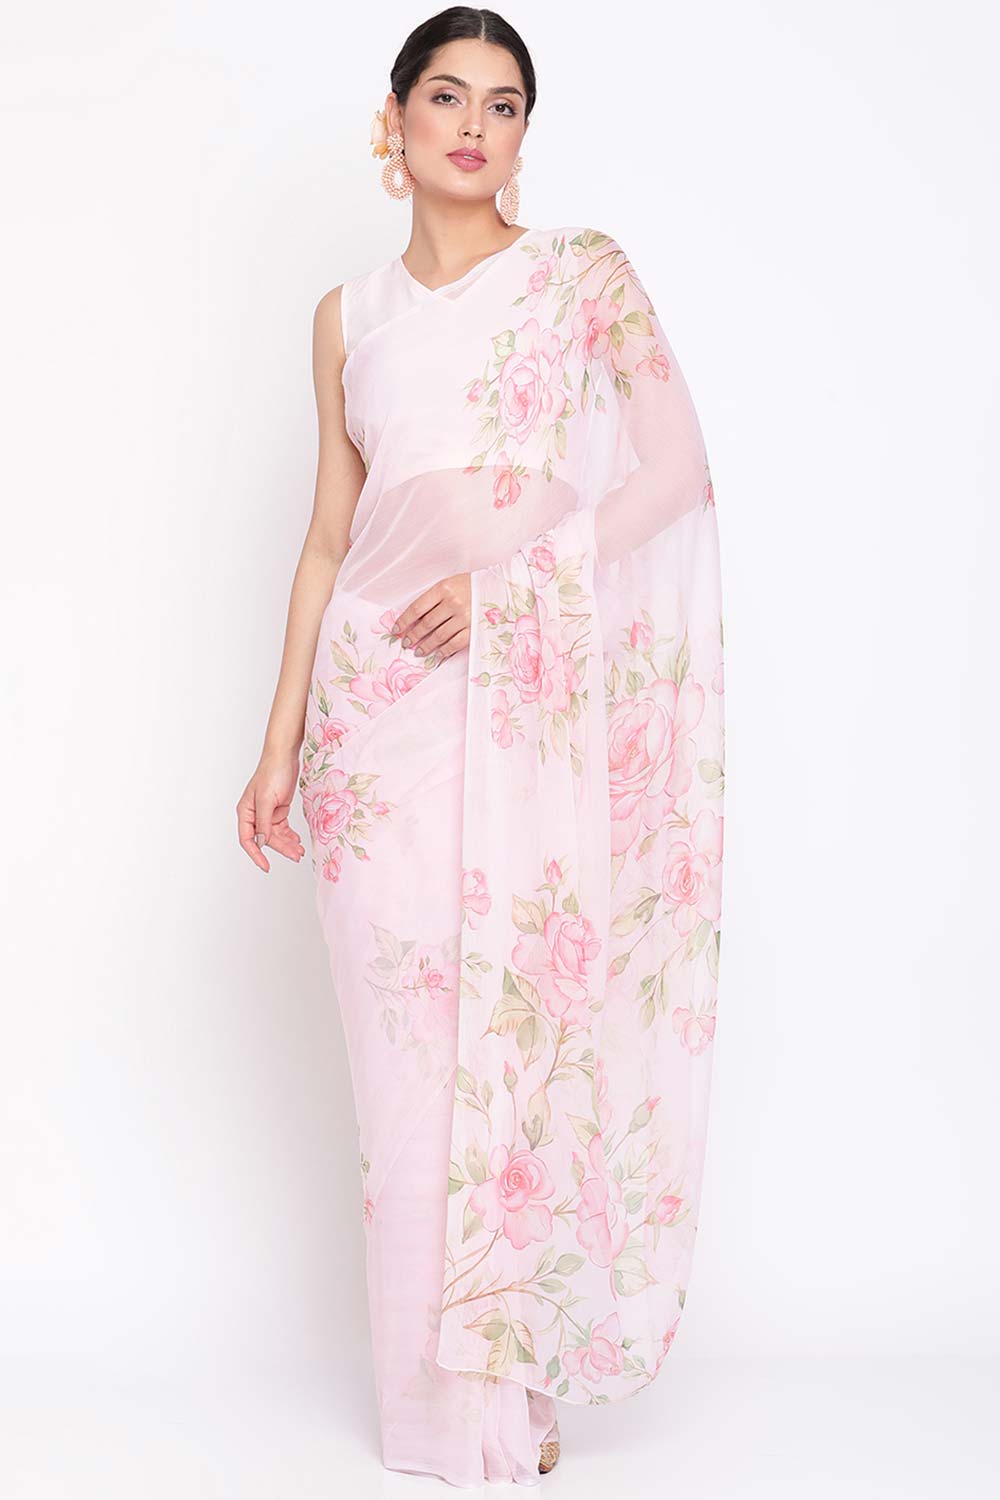 Buy Chiffon Digital print Saree in Baby Pink